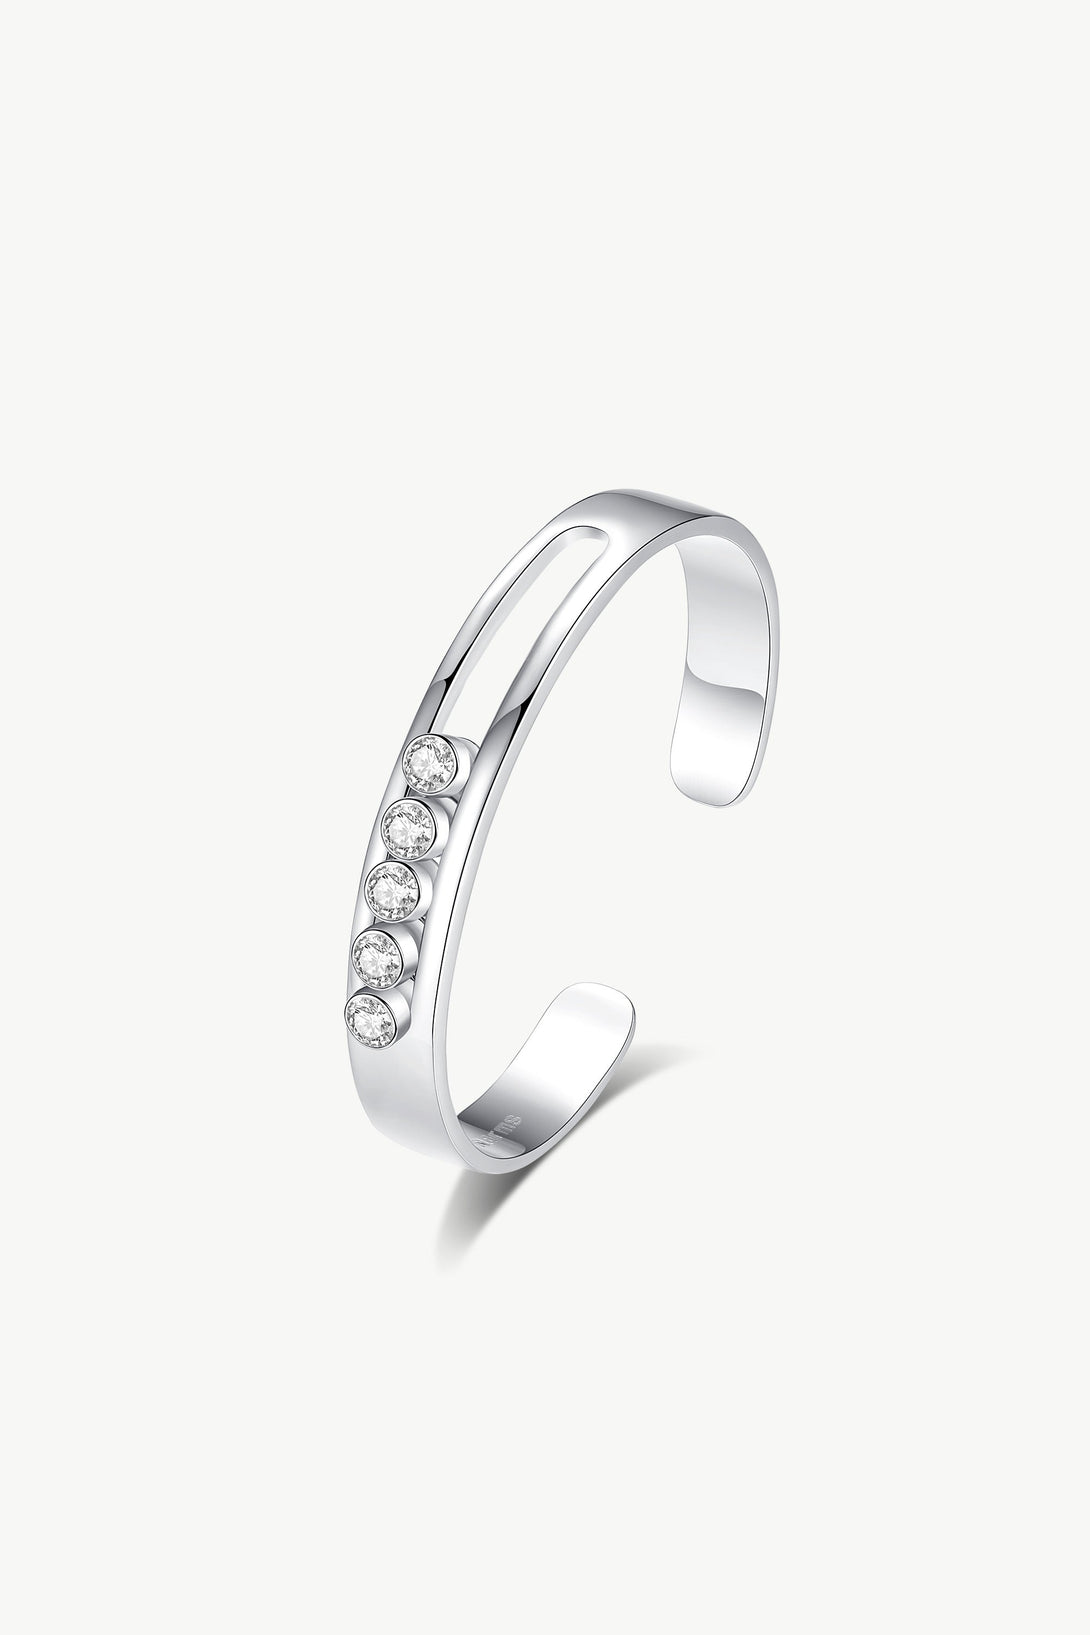 Audrey Silver Twinkling Clear Zirconia Half Crescent Bangle Bracelet - Classicharms